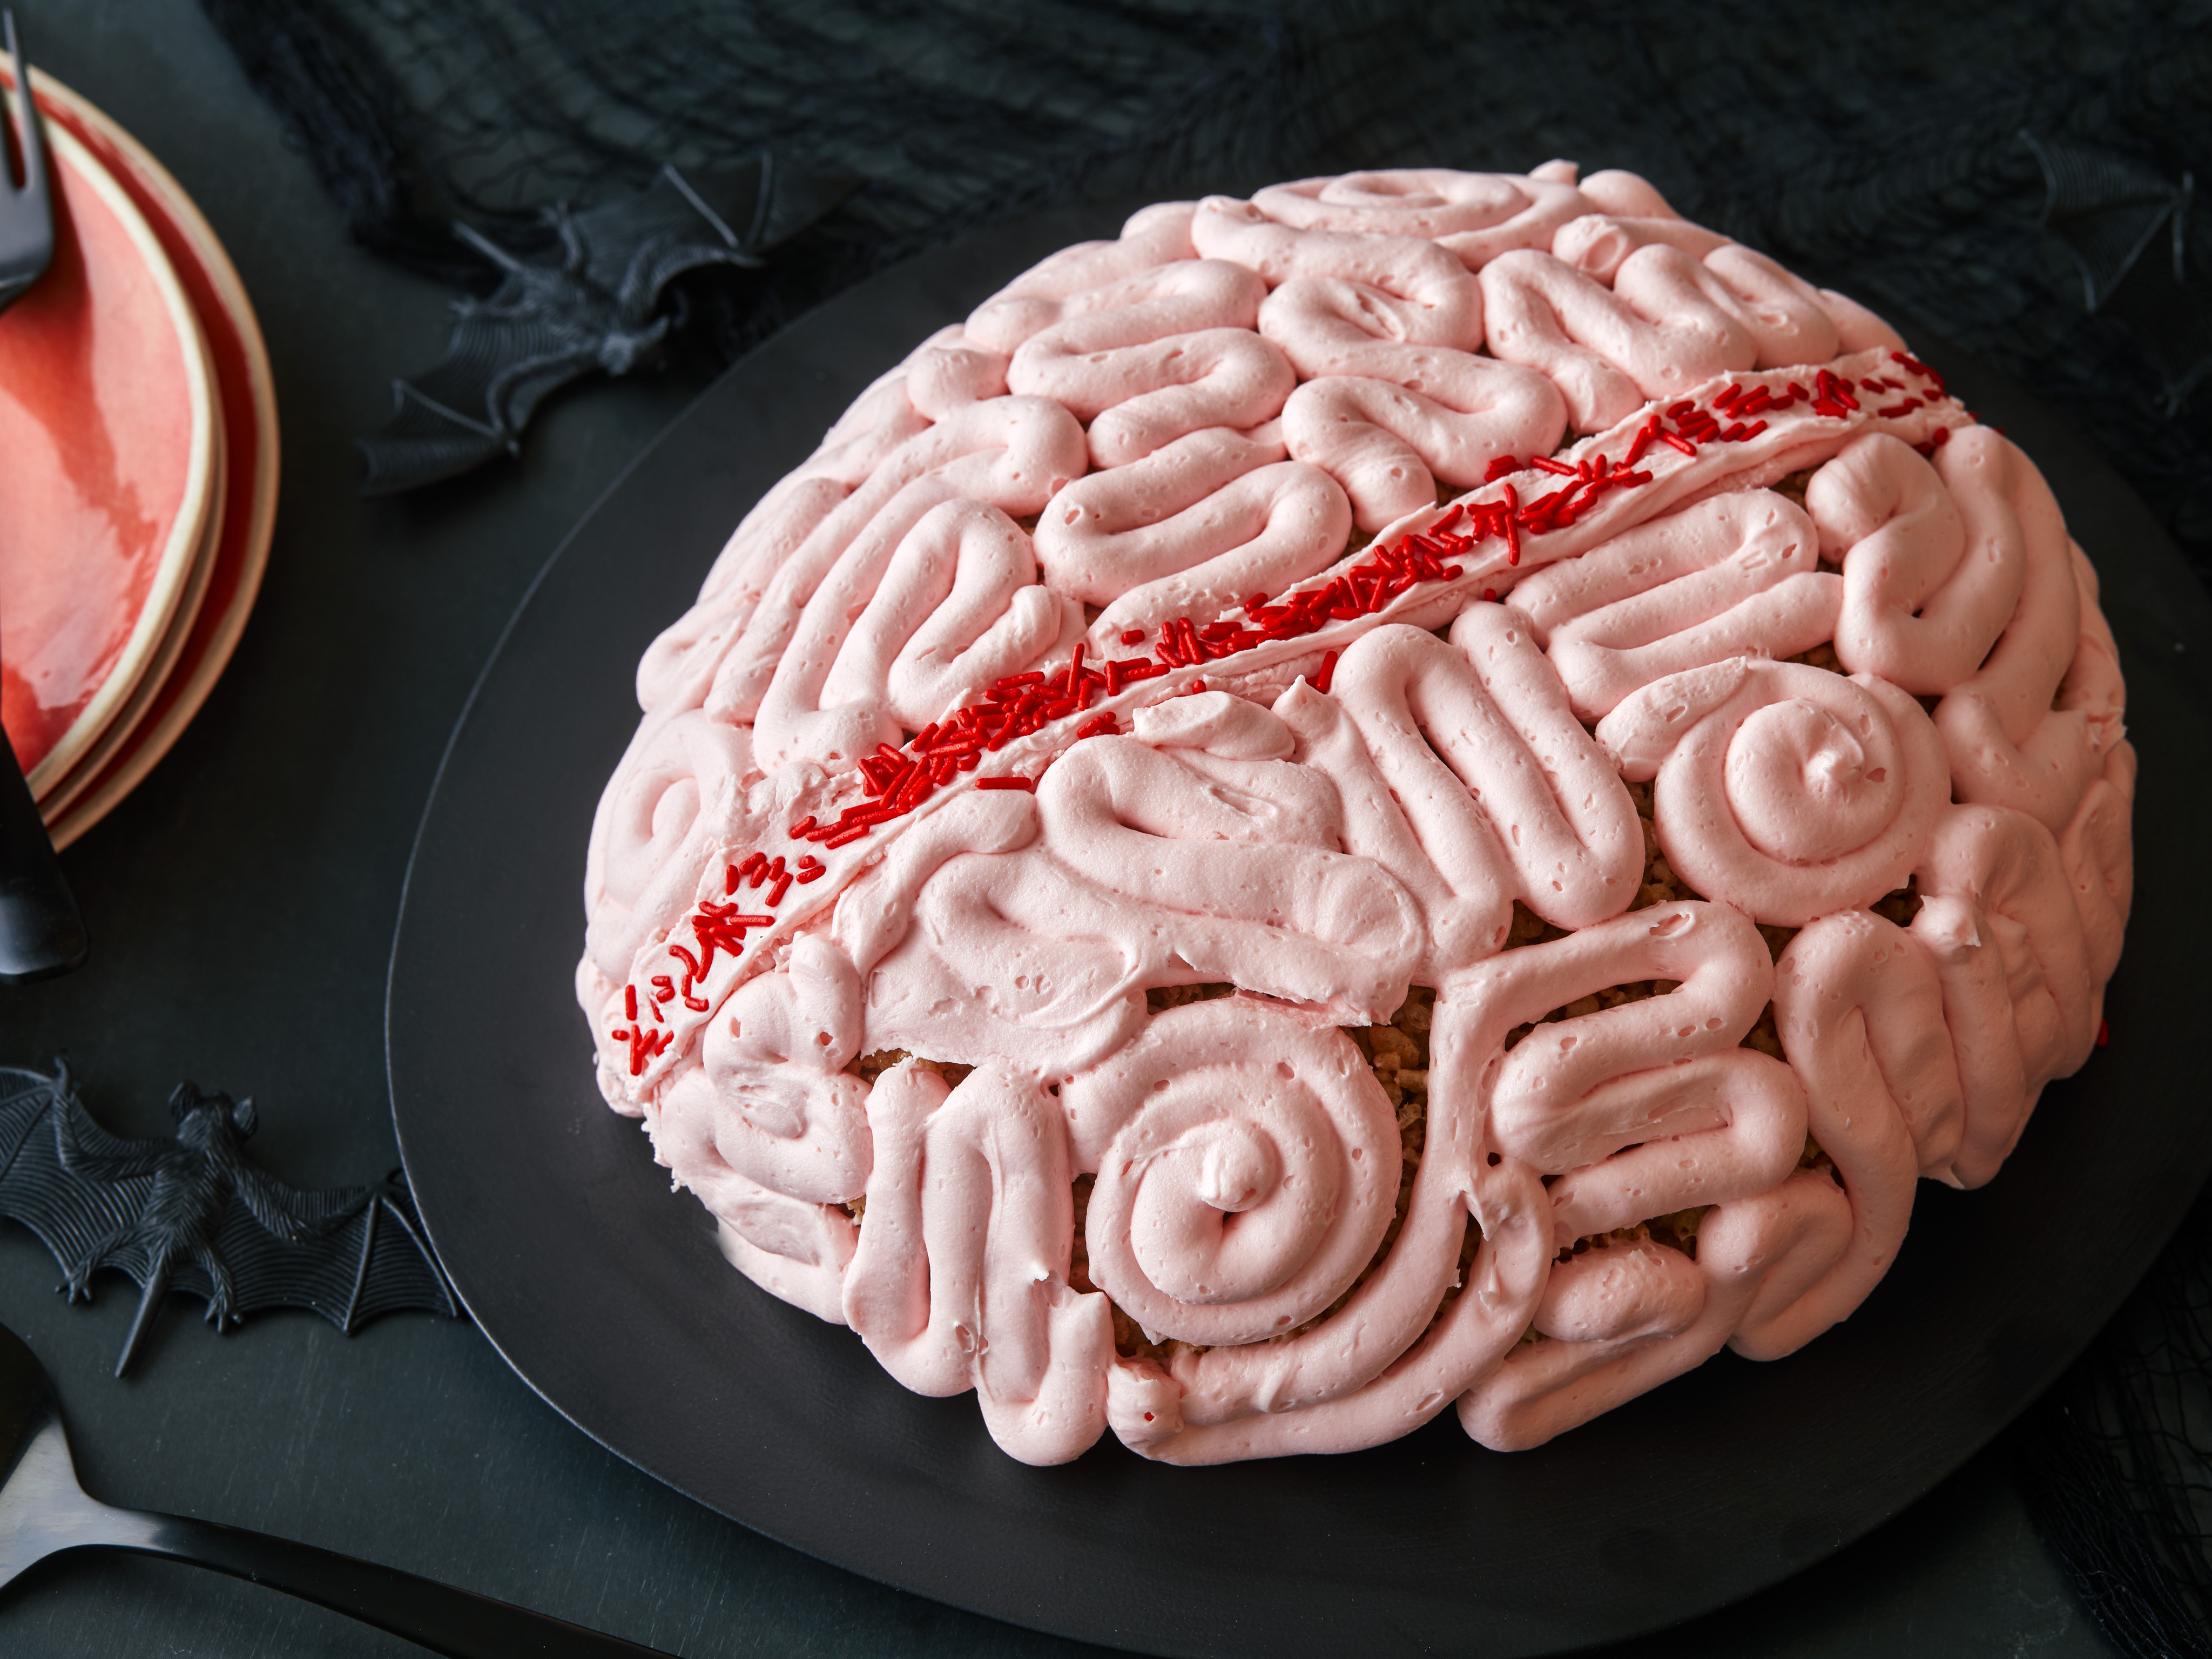 Halloween brain cheesecake - Italian recipes by GialloZafferano